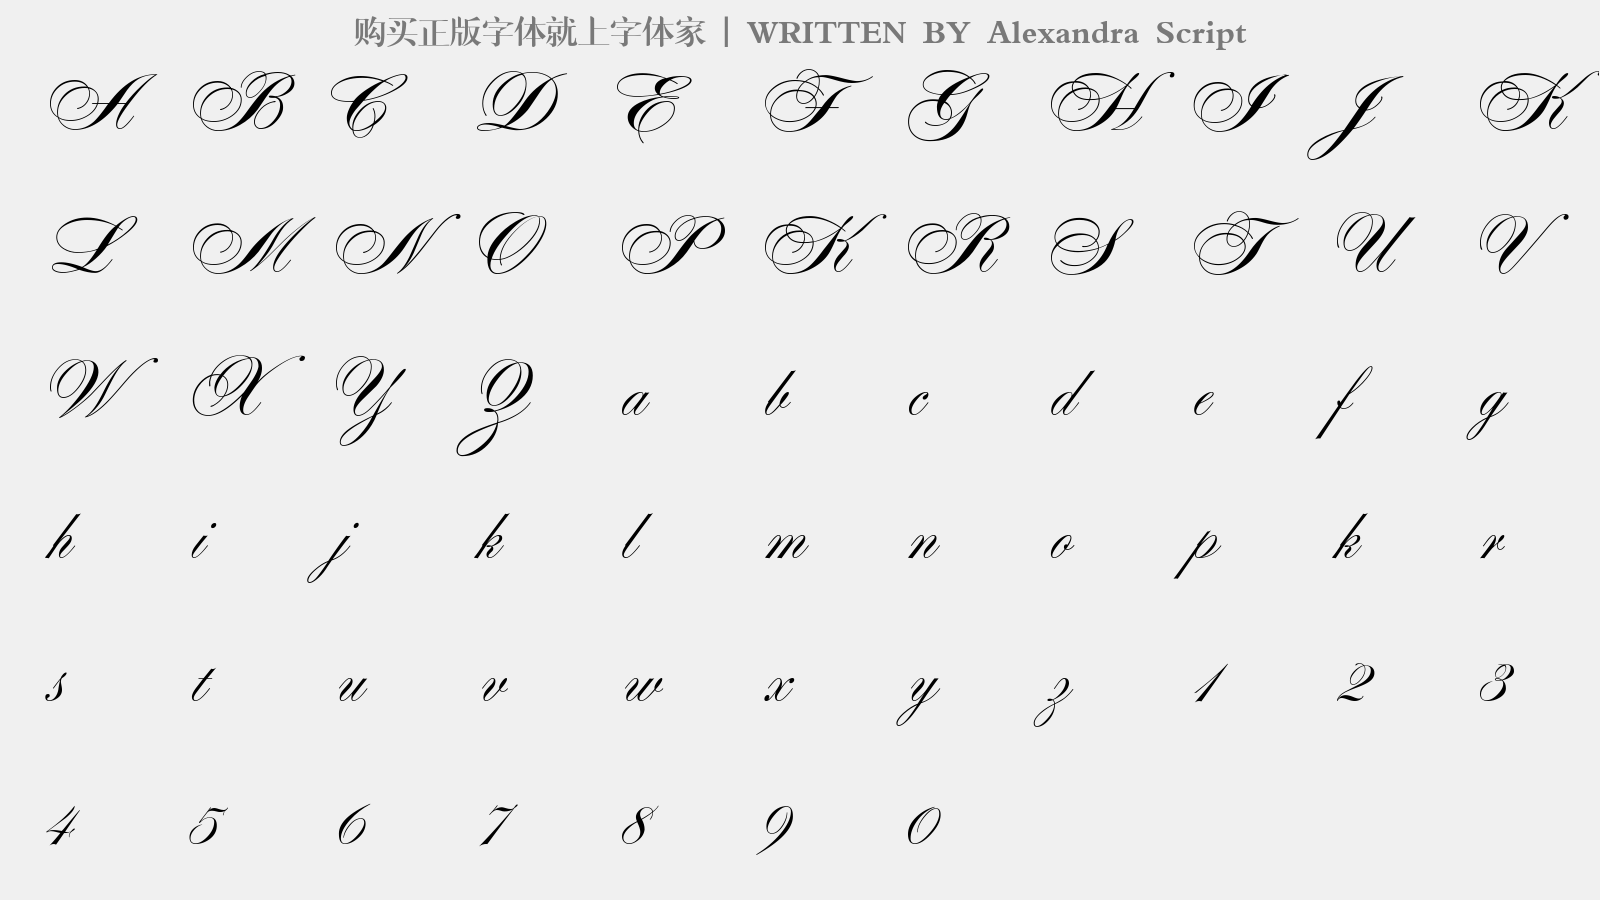 Alexandra Script - 大写字母/小写字母/数字